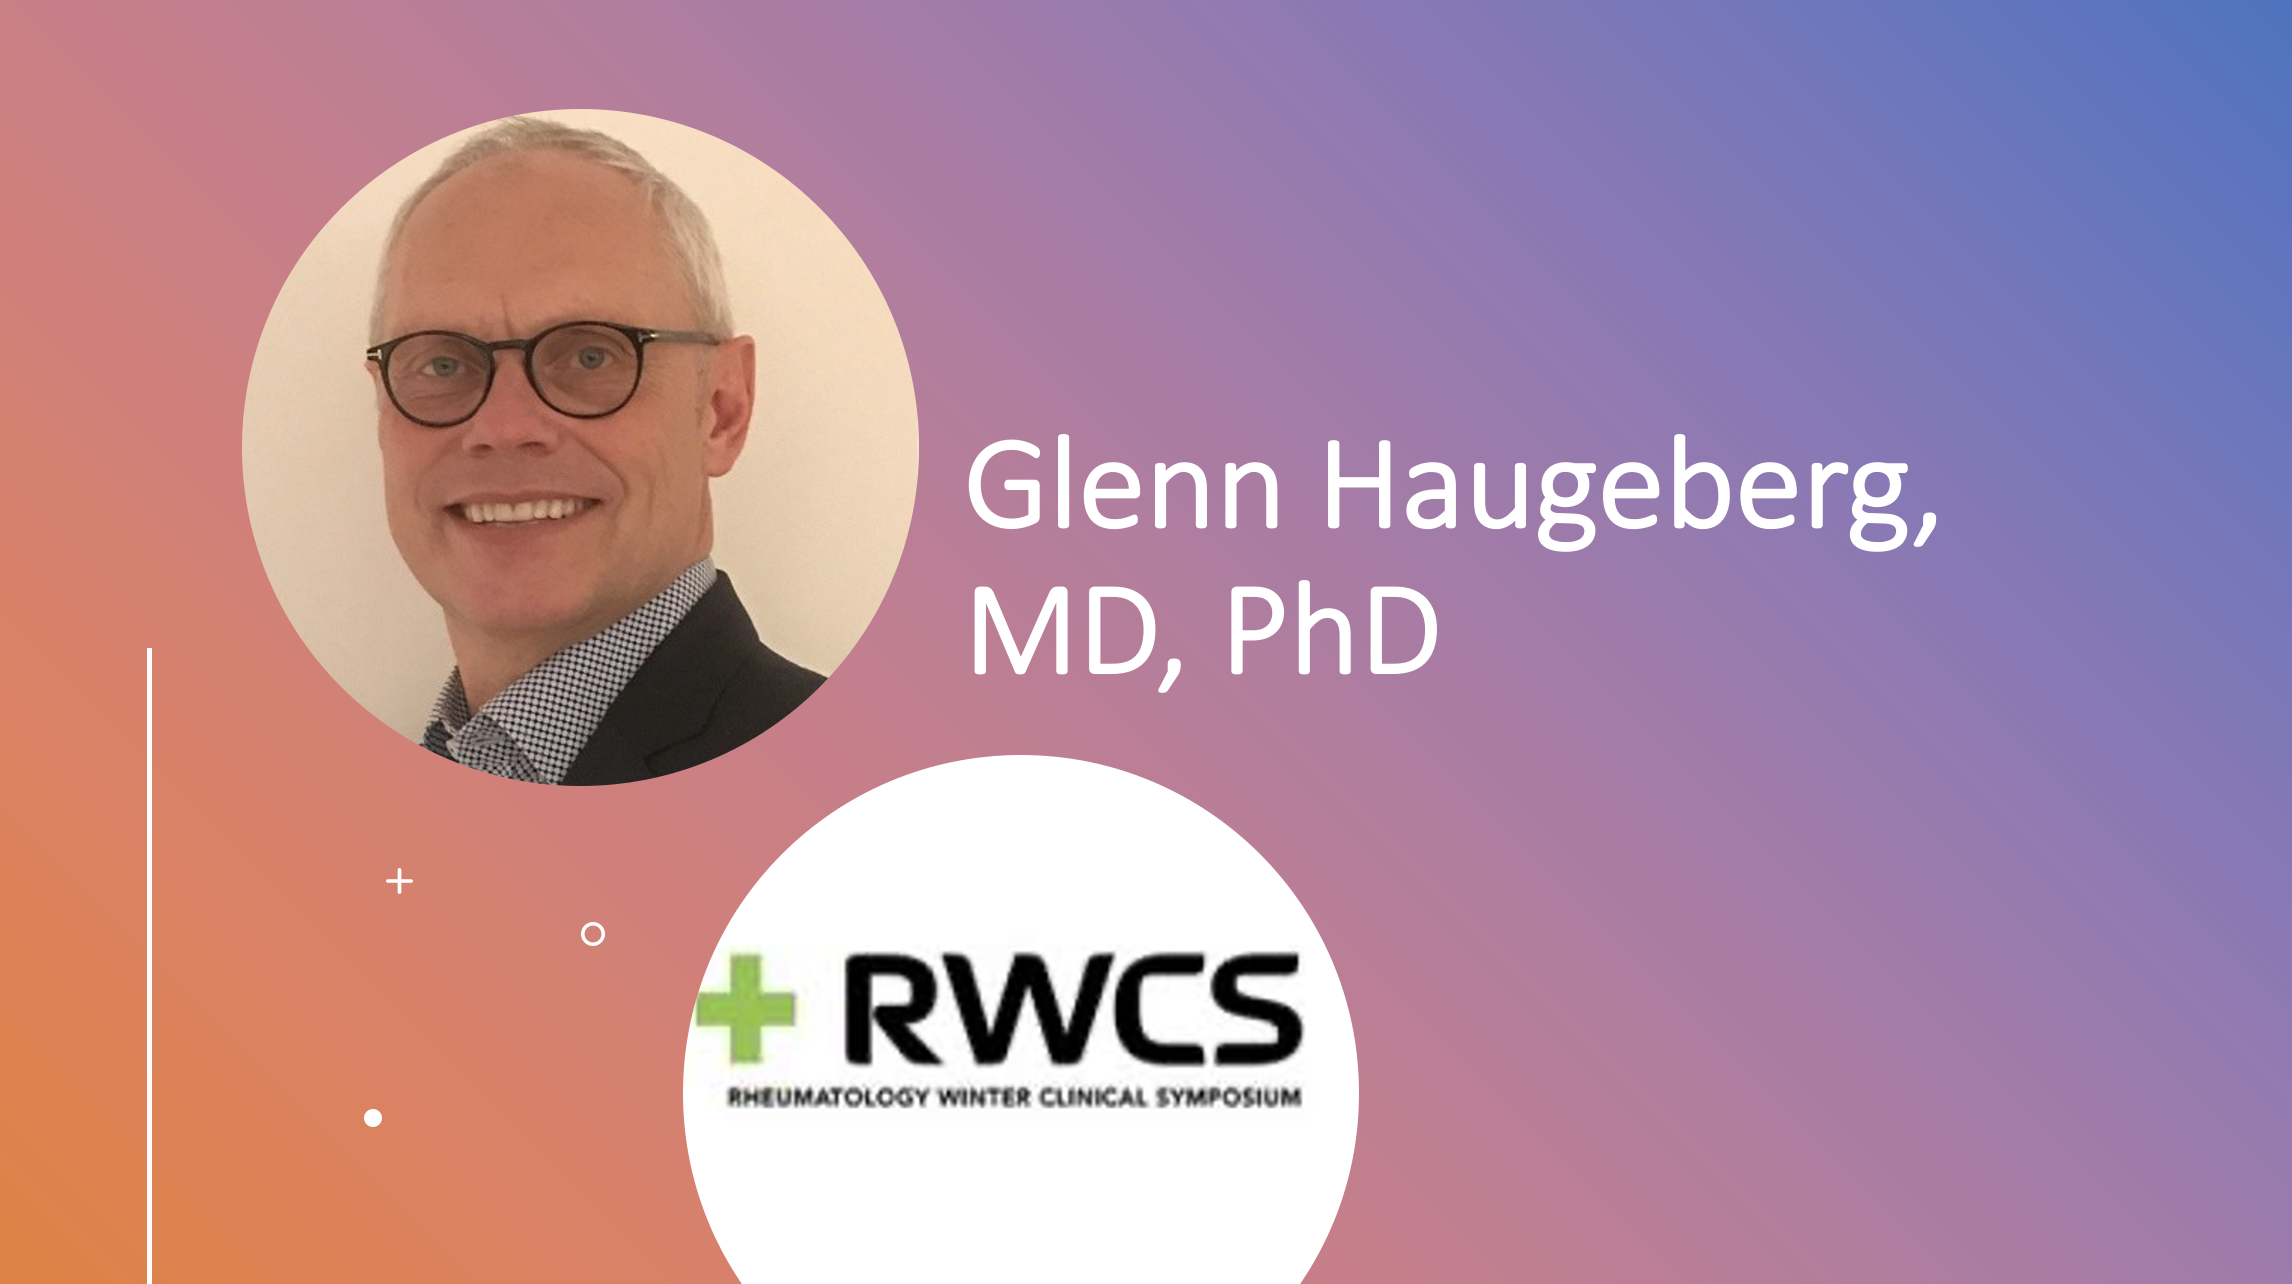 Glenn Haugeberg, MD, PhD: Rheumatology Winter Clinical Symposium